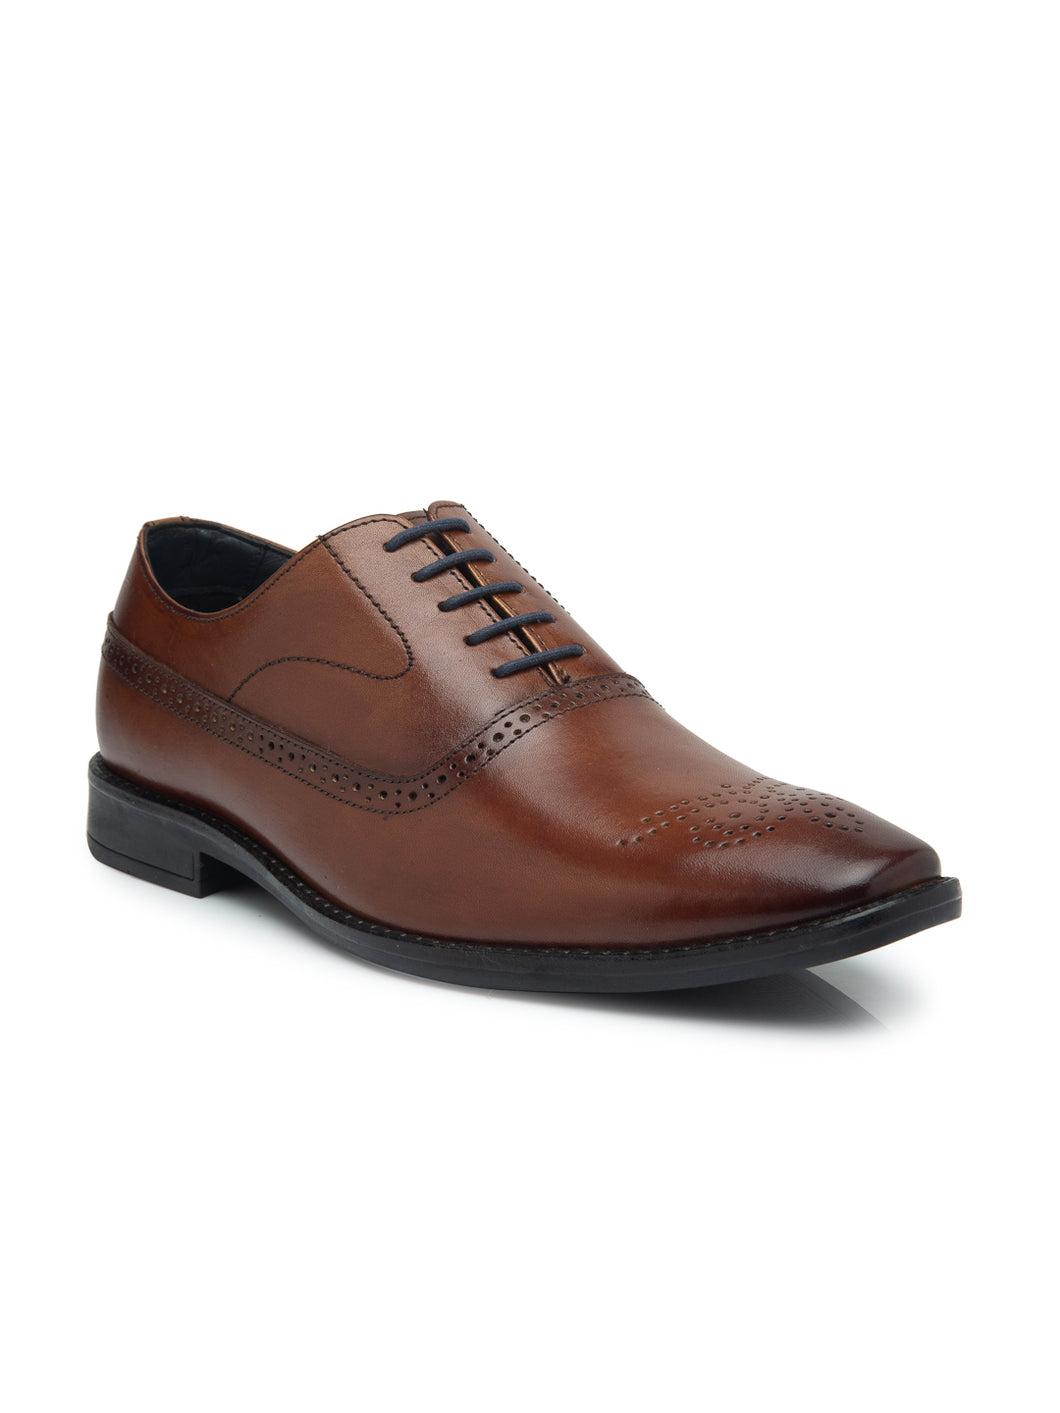 Teakwood Leather Men Perforated Derby Formal Shoes(COGNAC)